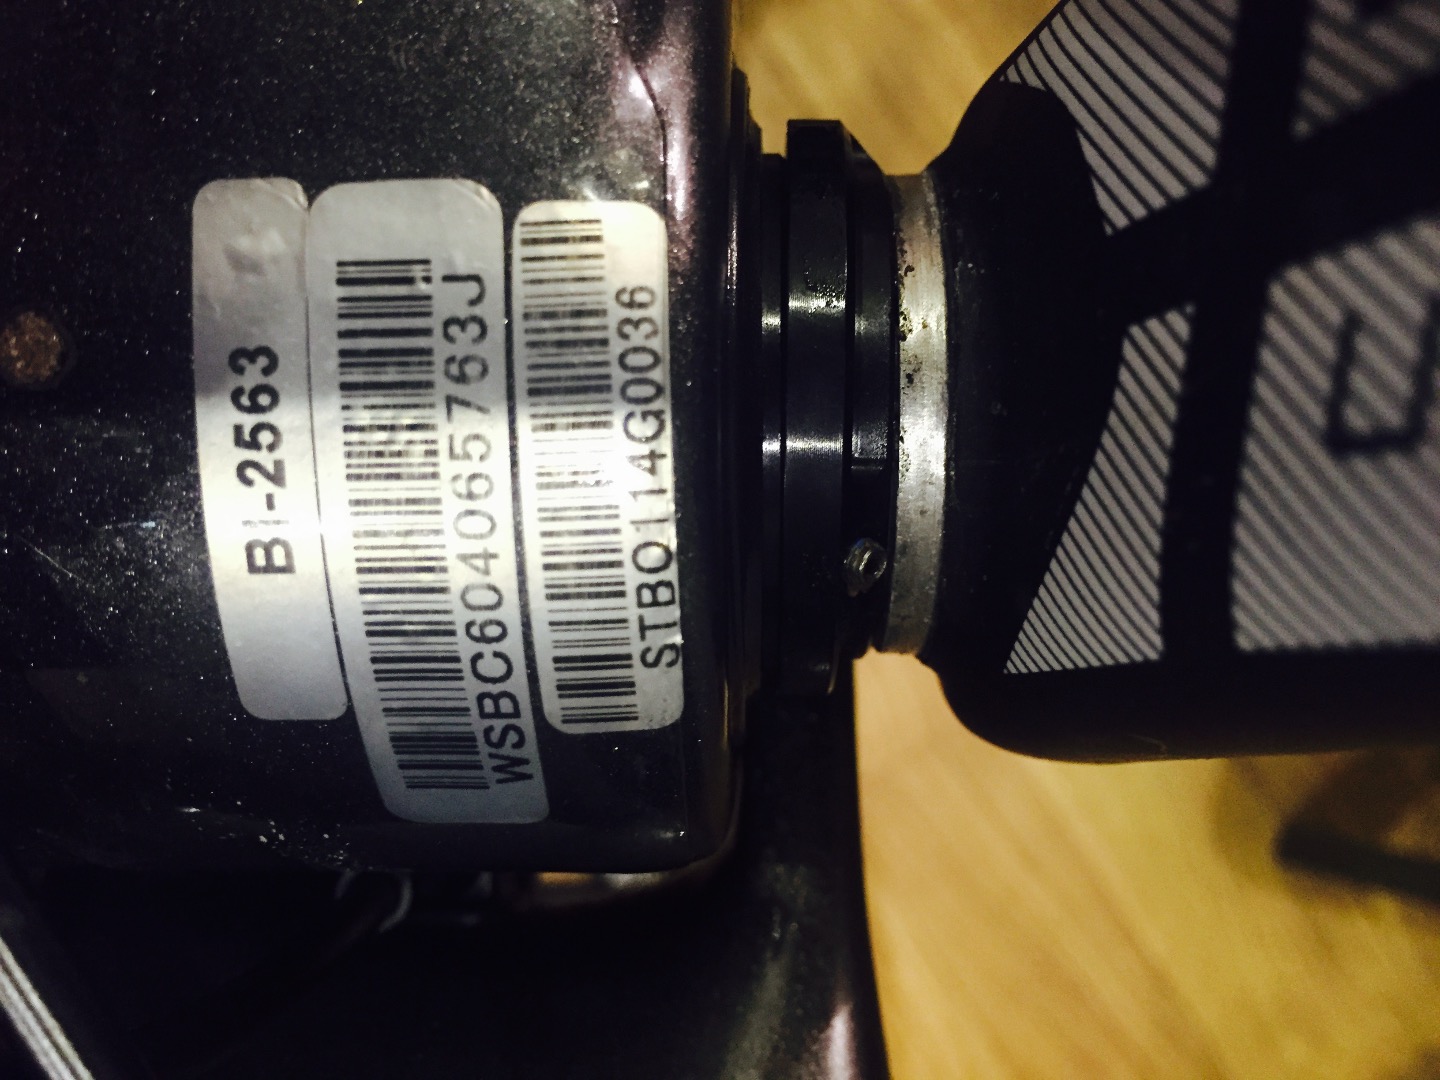 Stolen Bike Check Serial Number